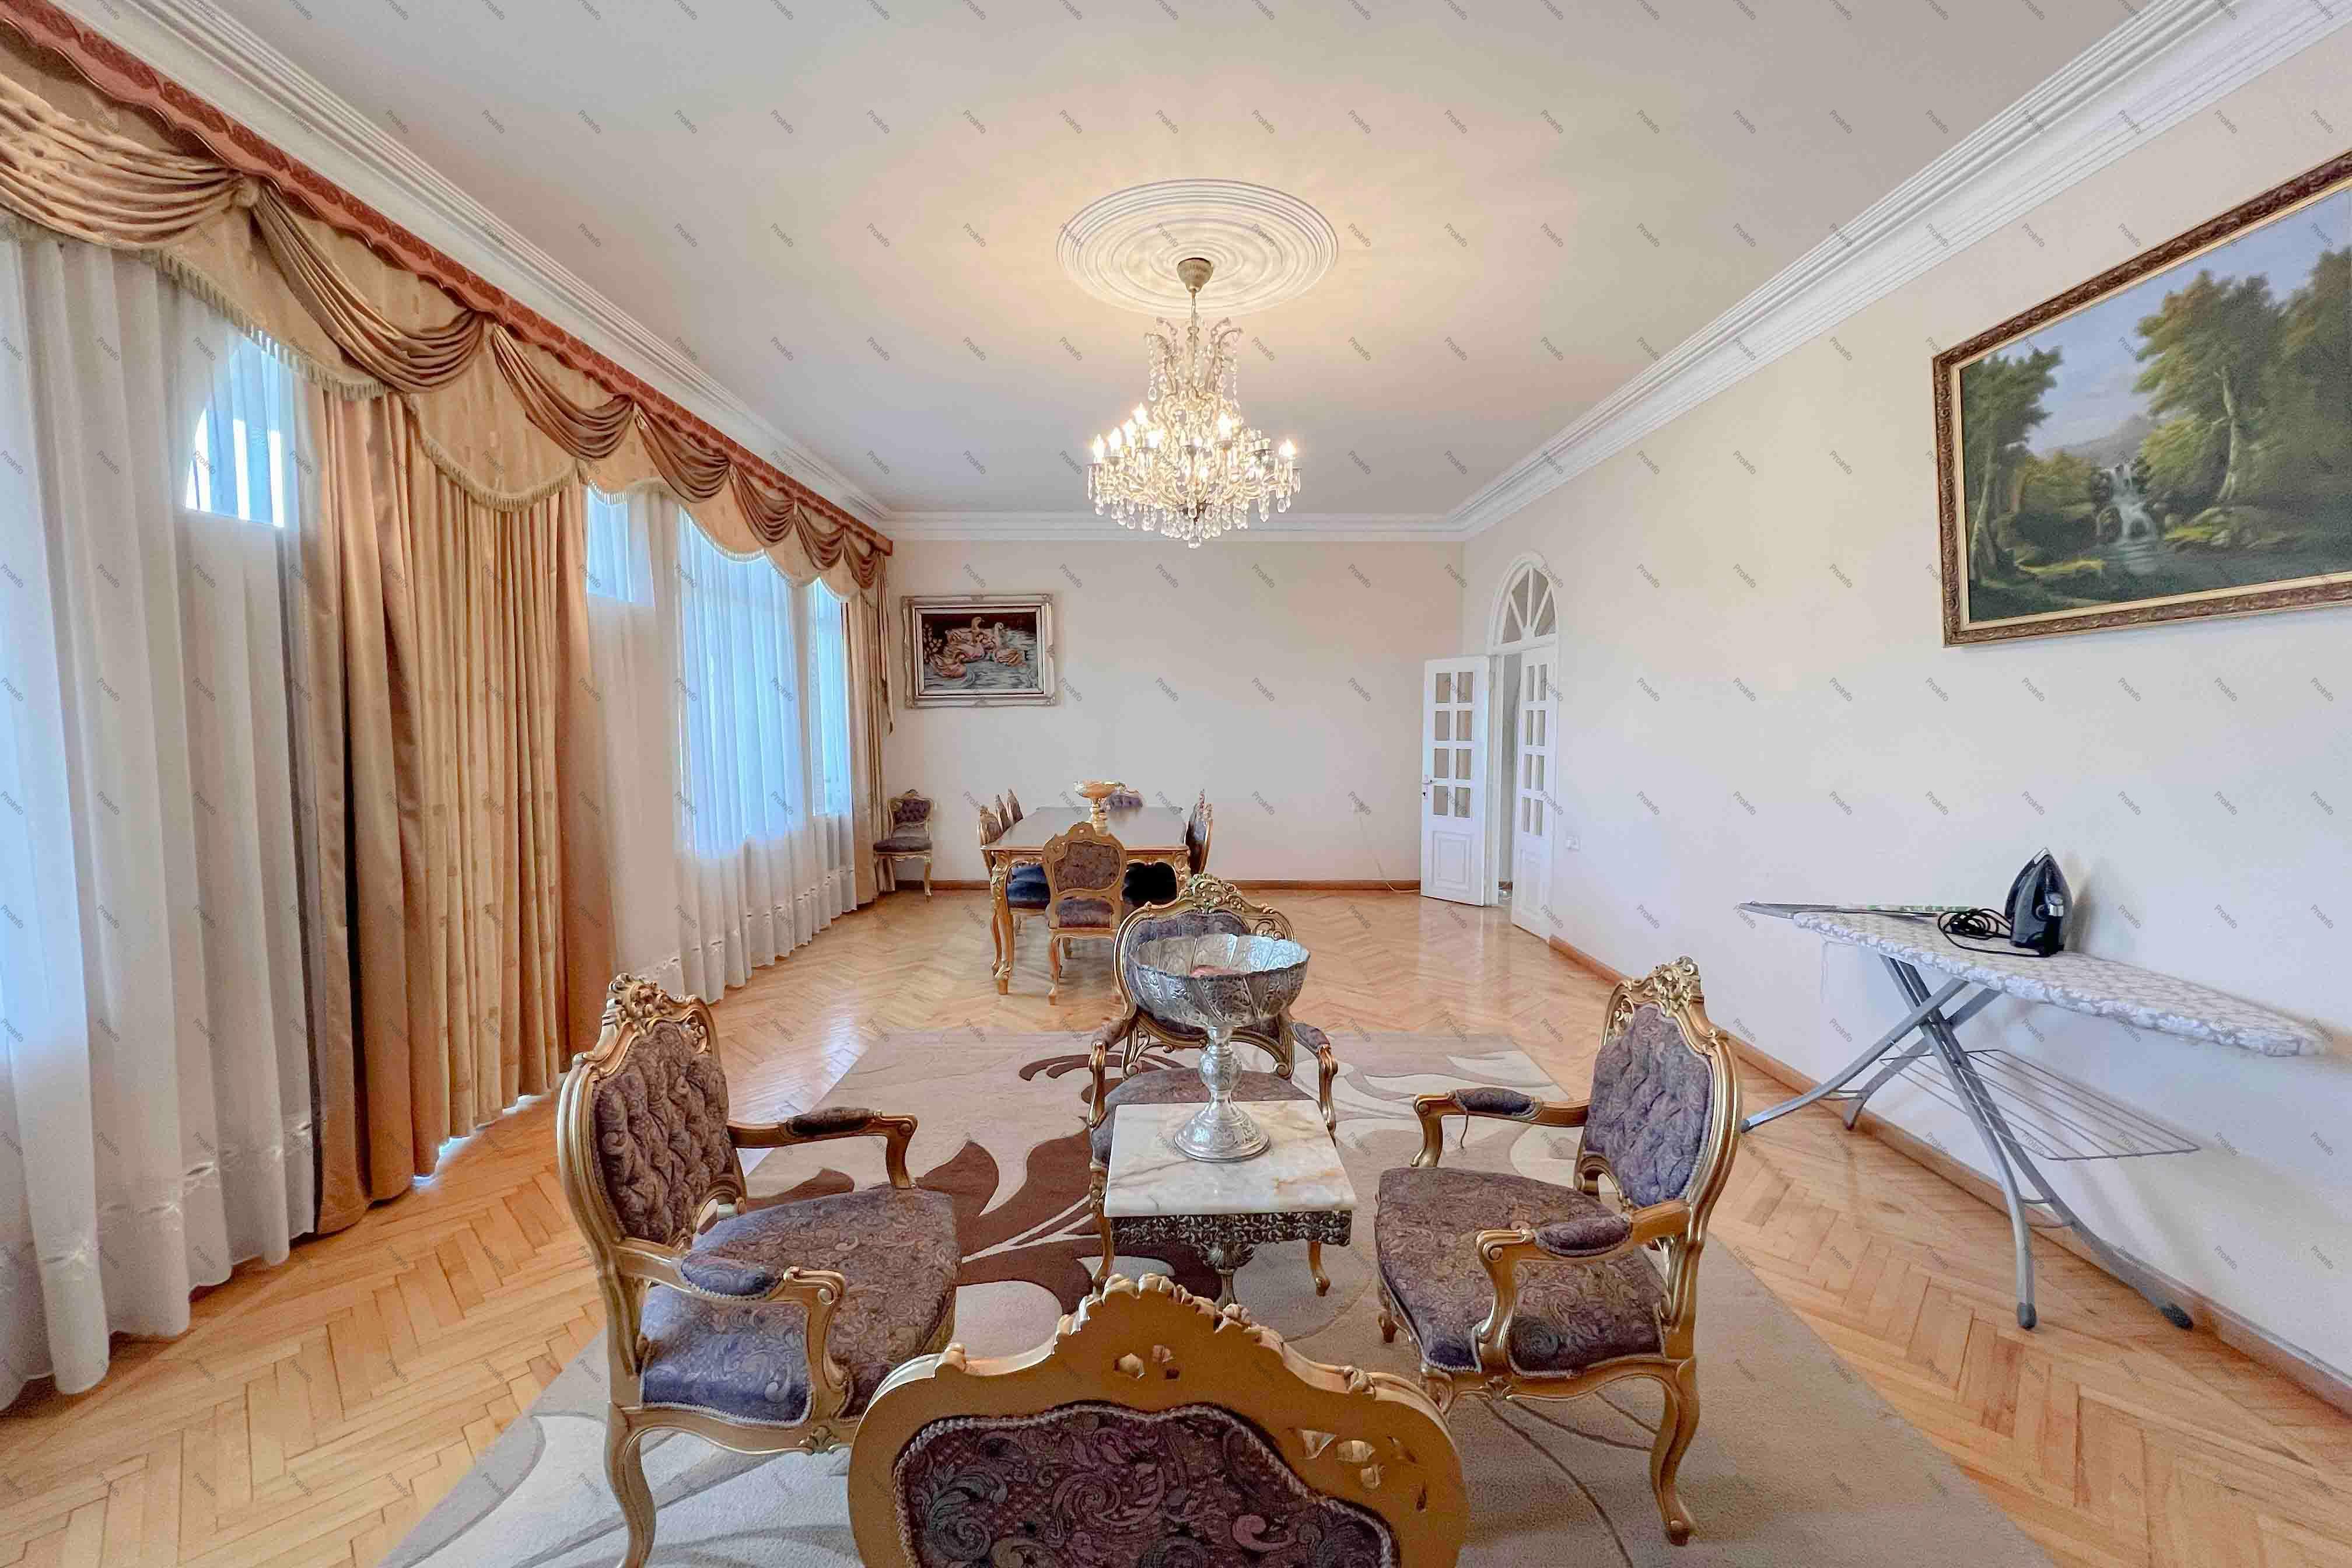 Продается Չորս հարկանի собственный дом Երևան, Մալաթիա-Սեբաստիա, Տիչինայի 